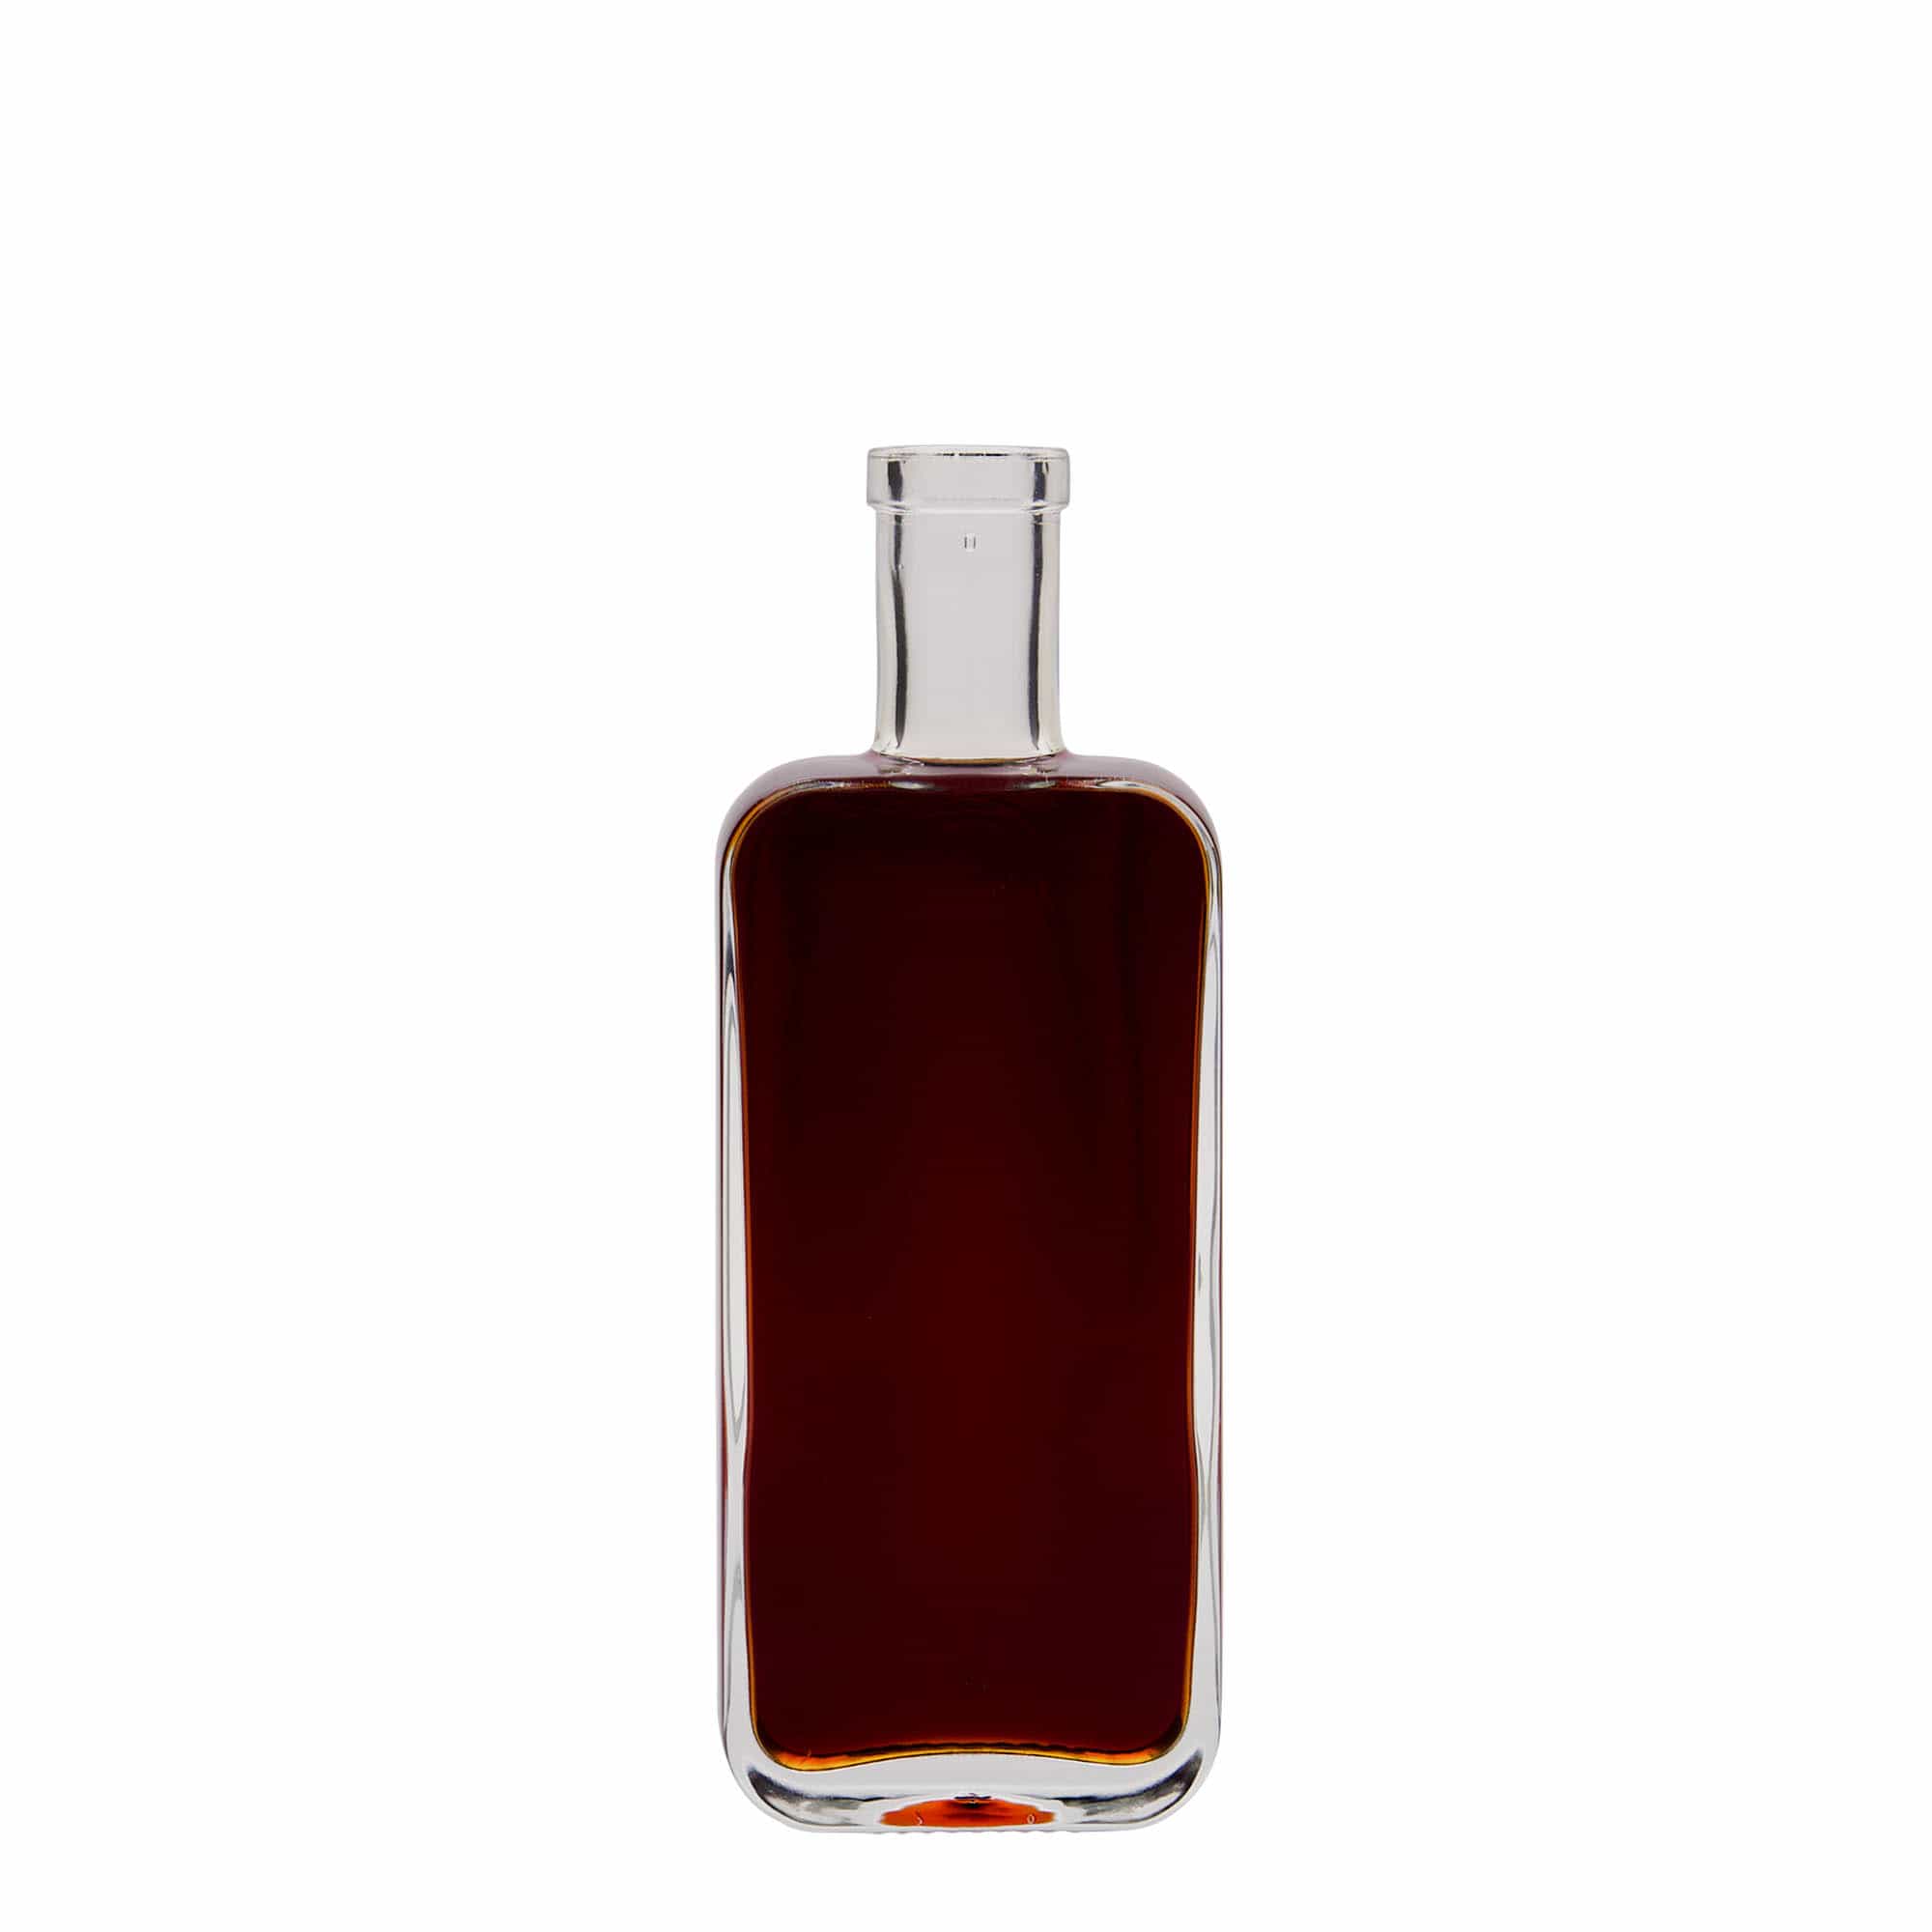 200 ml glass bottle 'Nice', rectangular, closure: cork